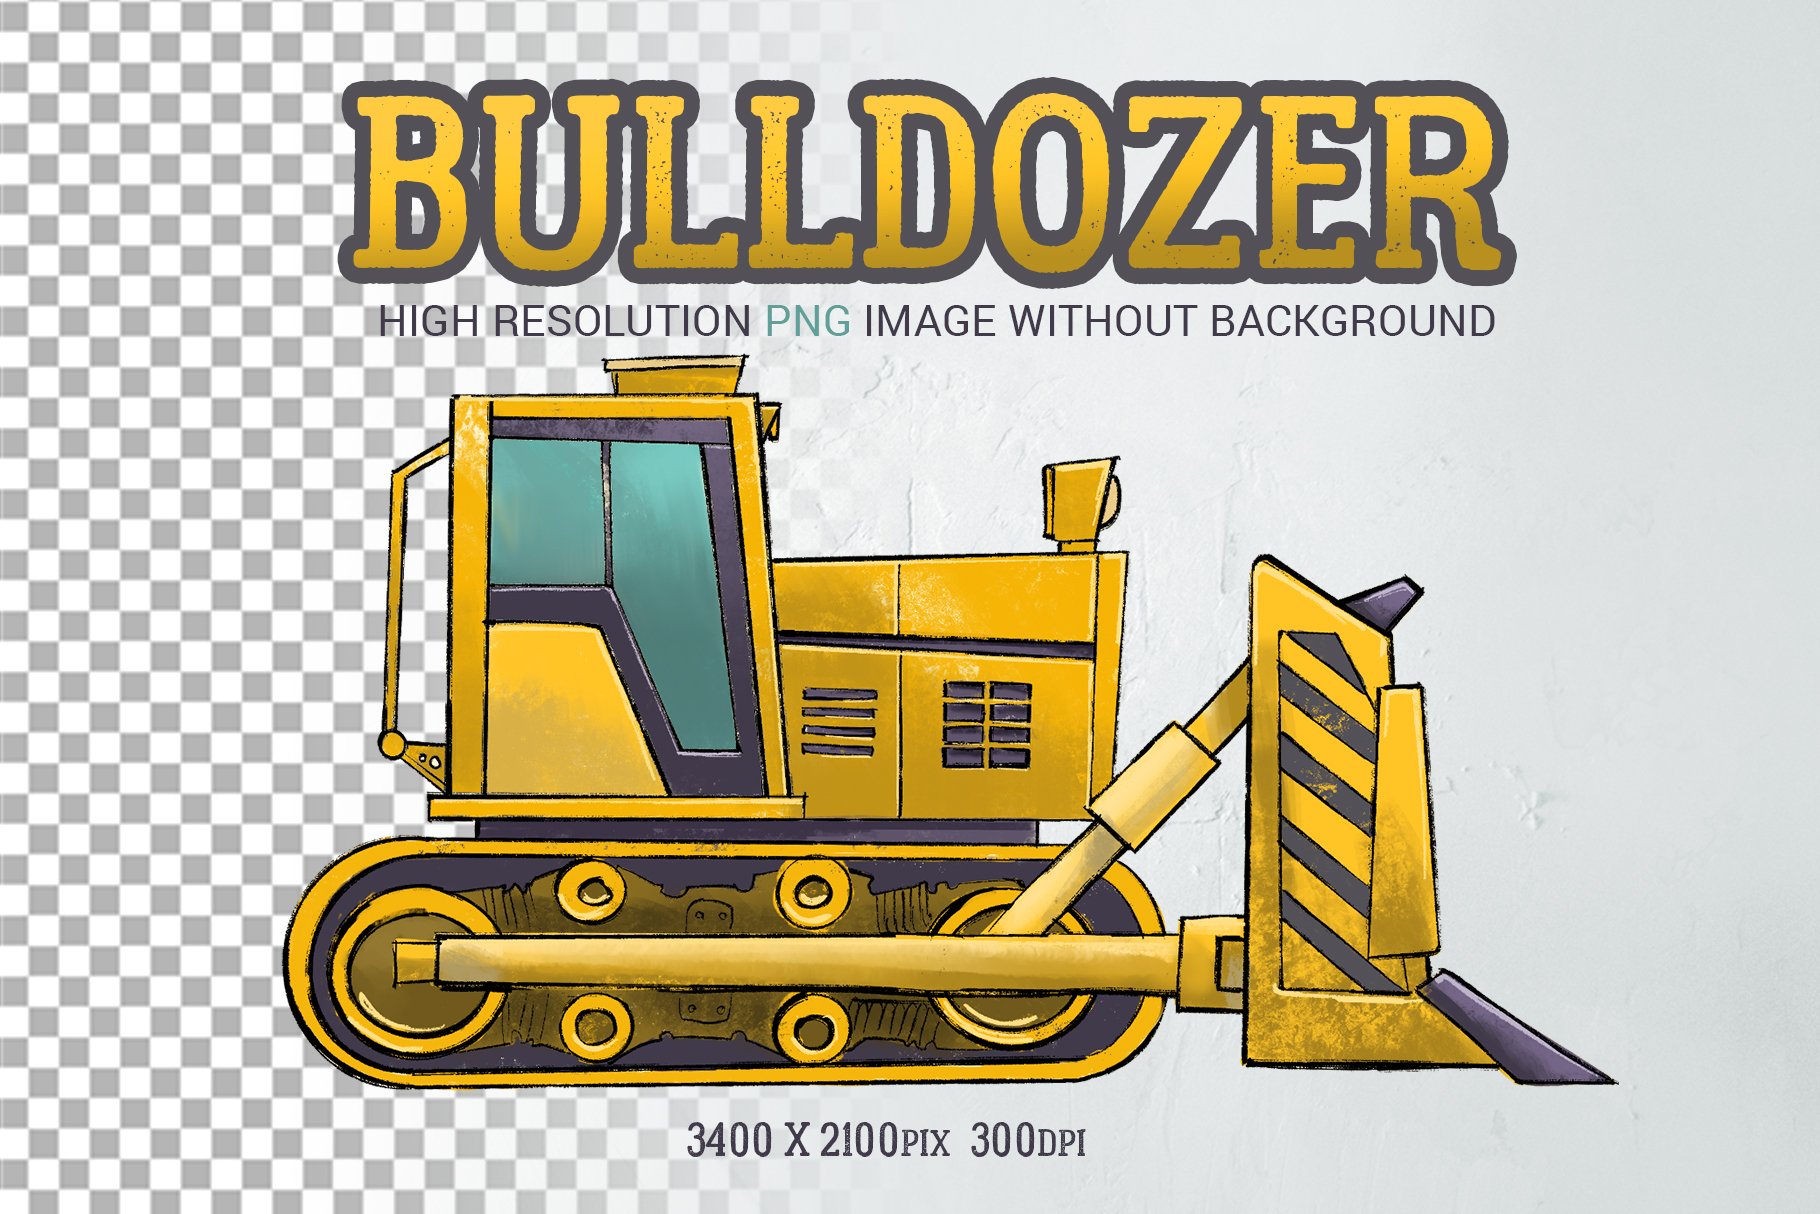 Bulldozer PNG digital illustration cover image.